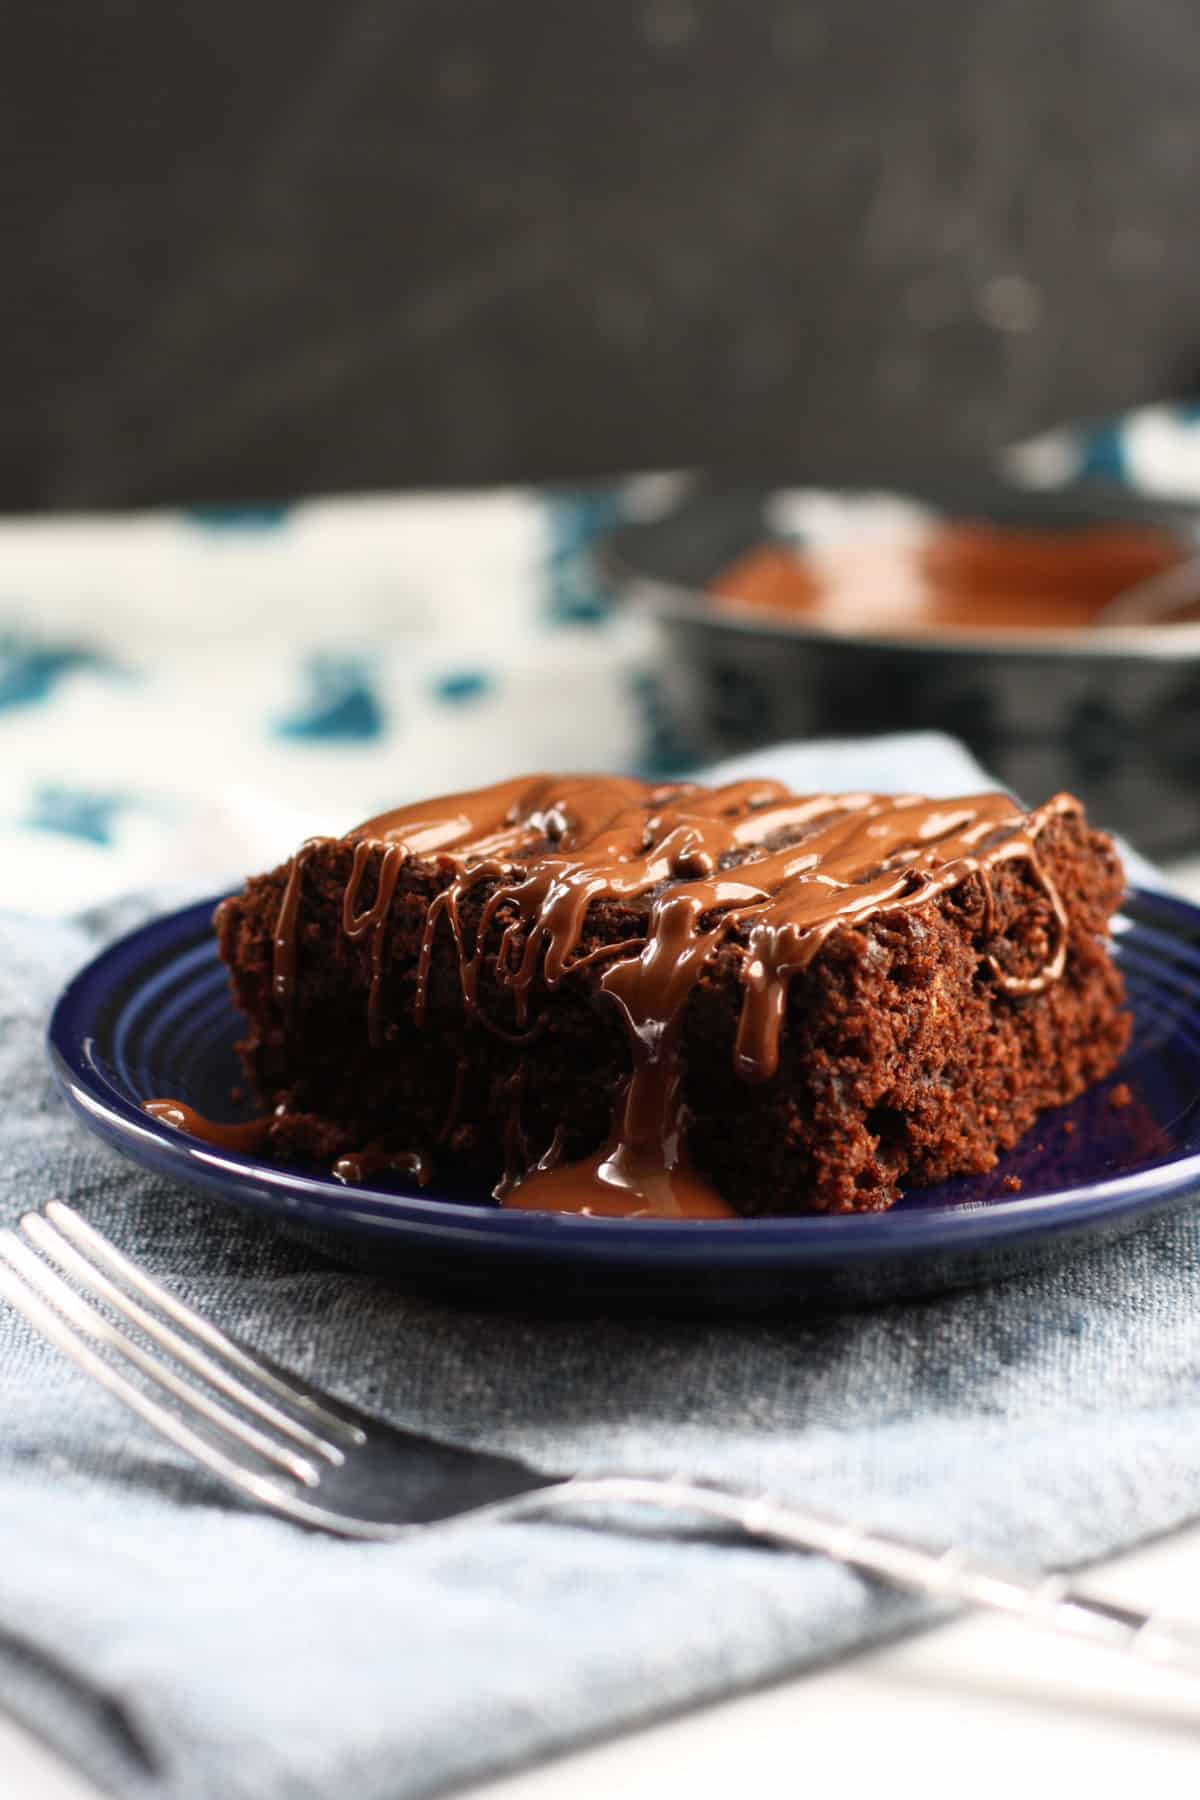 vegan chocolate cake with chocolate sauc on a blue plate